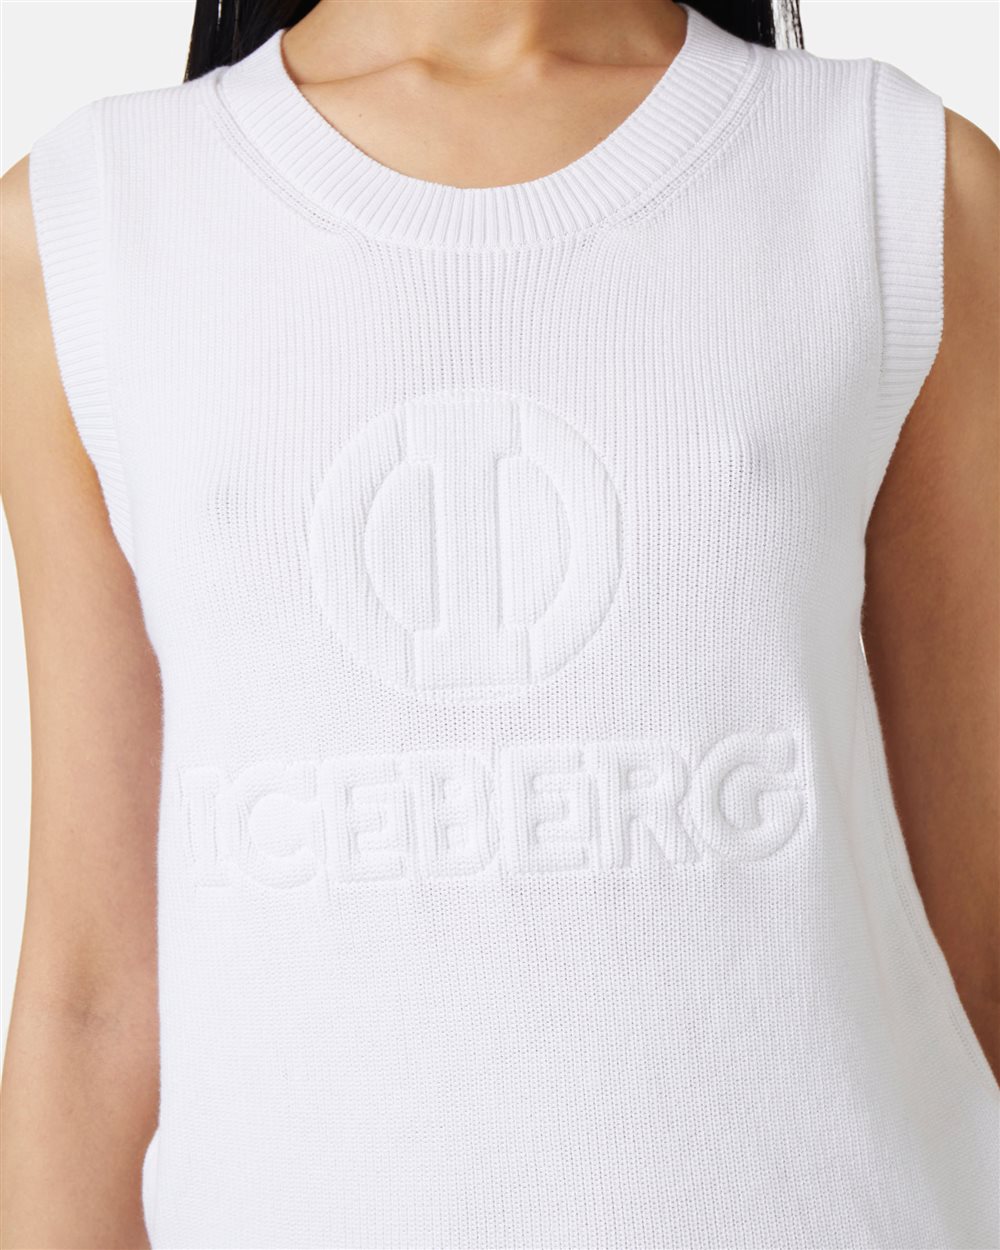 Vest with logo - Iceberg - Official Website